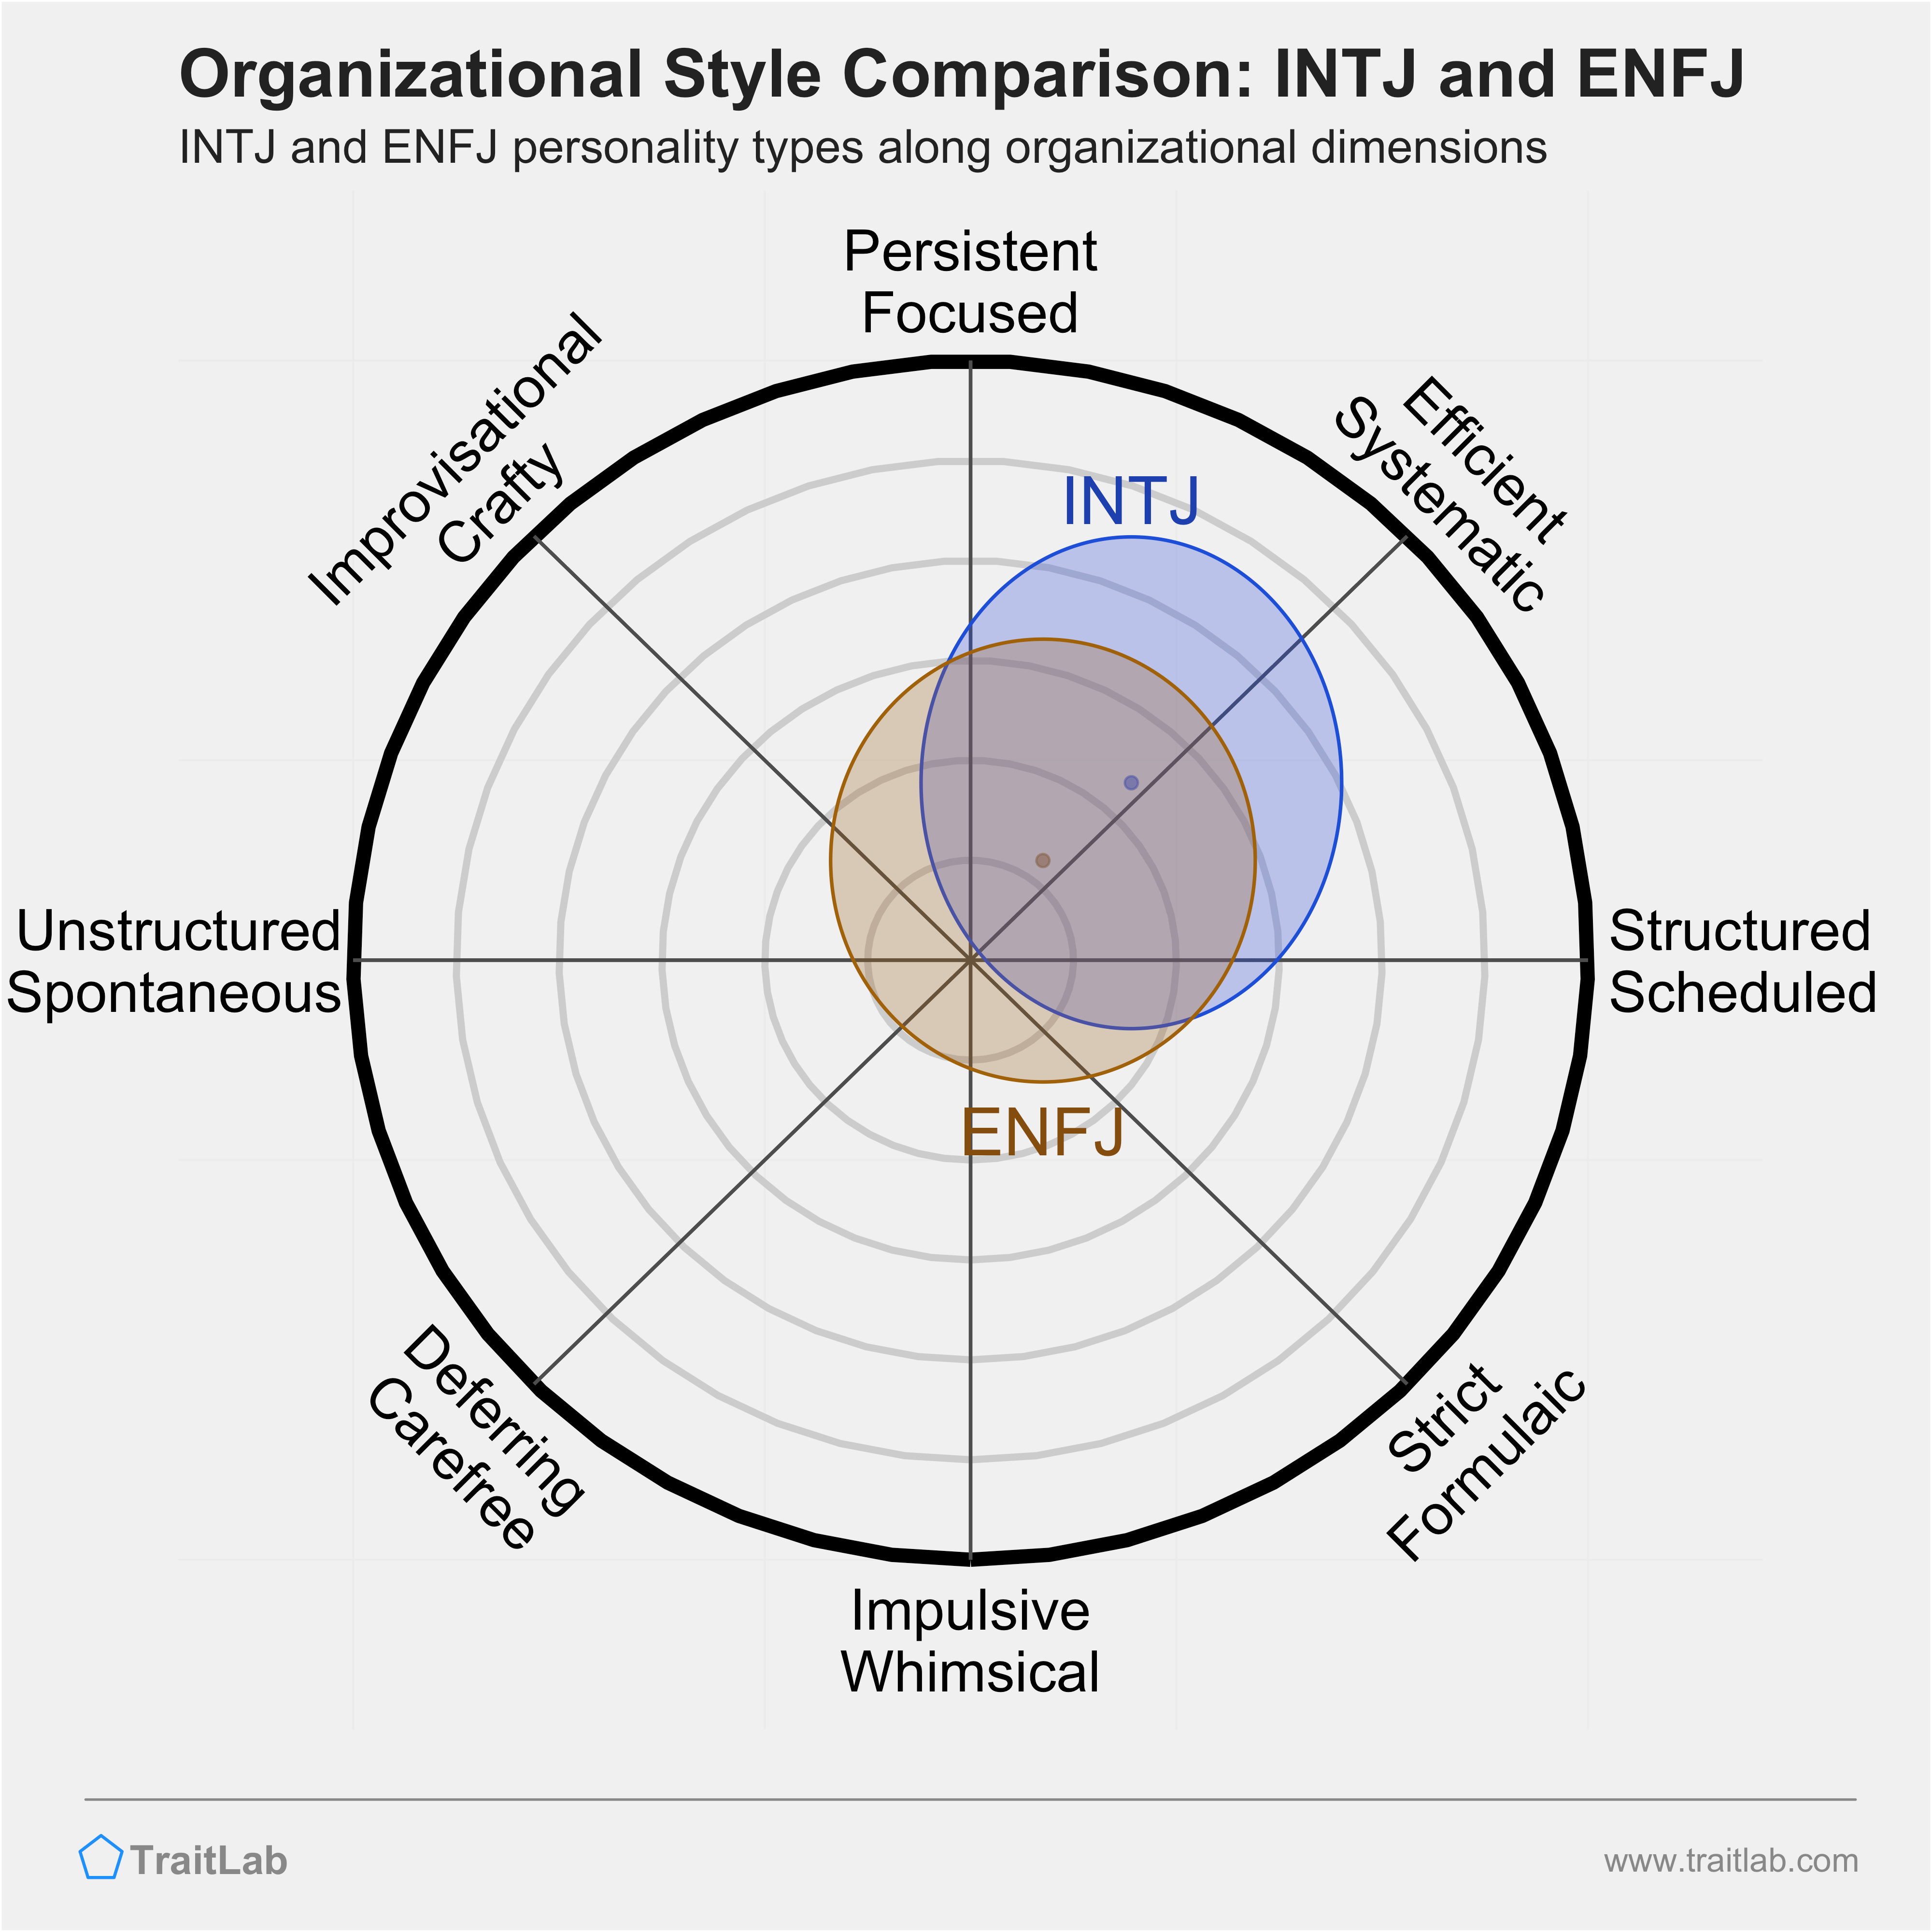 INTJ and ENFJ comparison across organizational dimensions